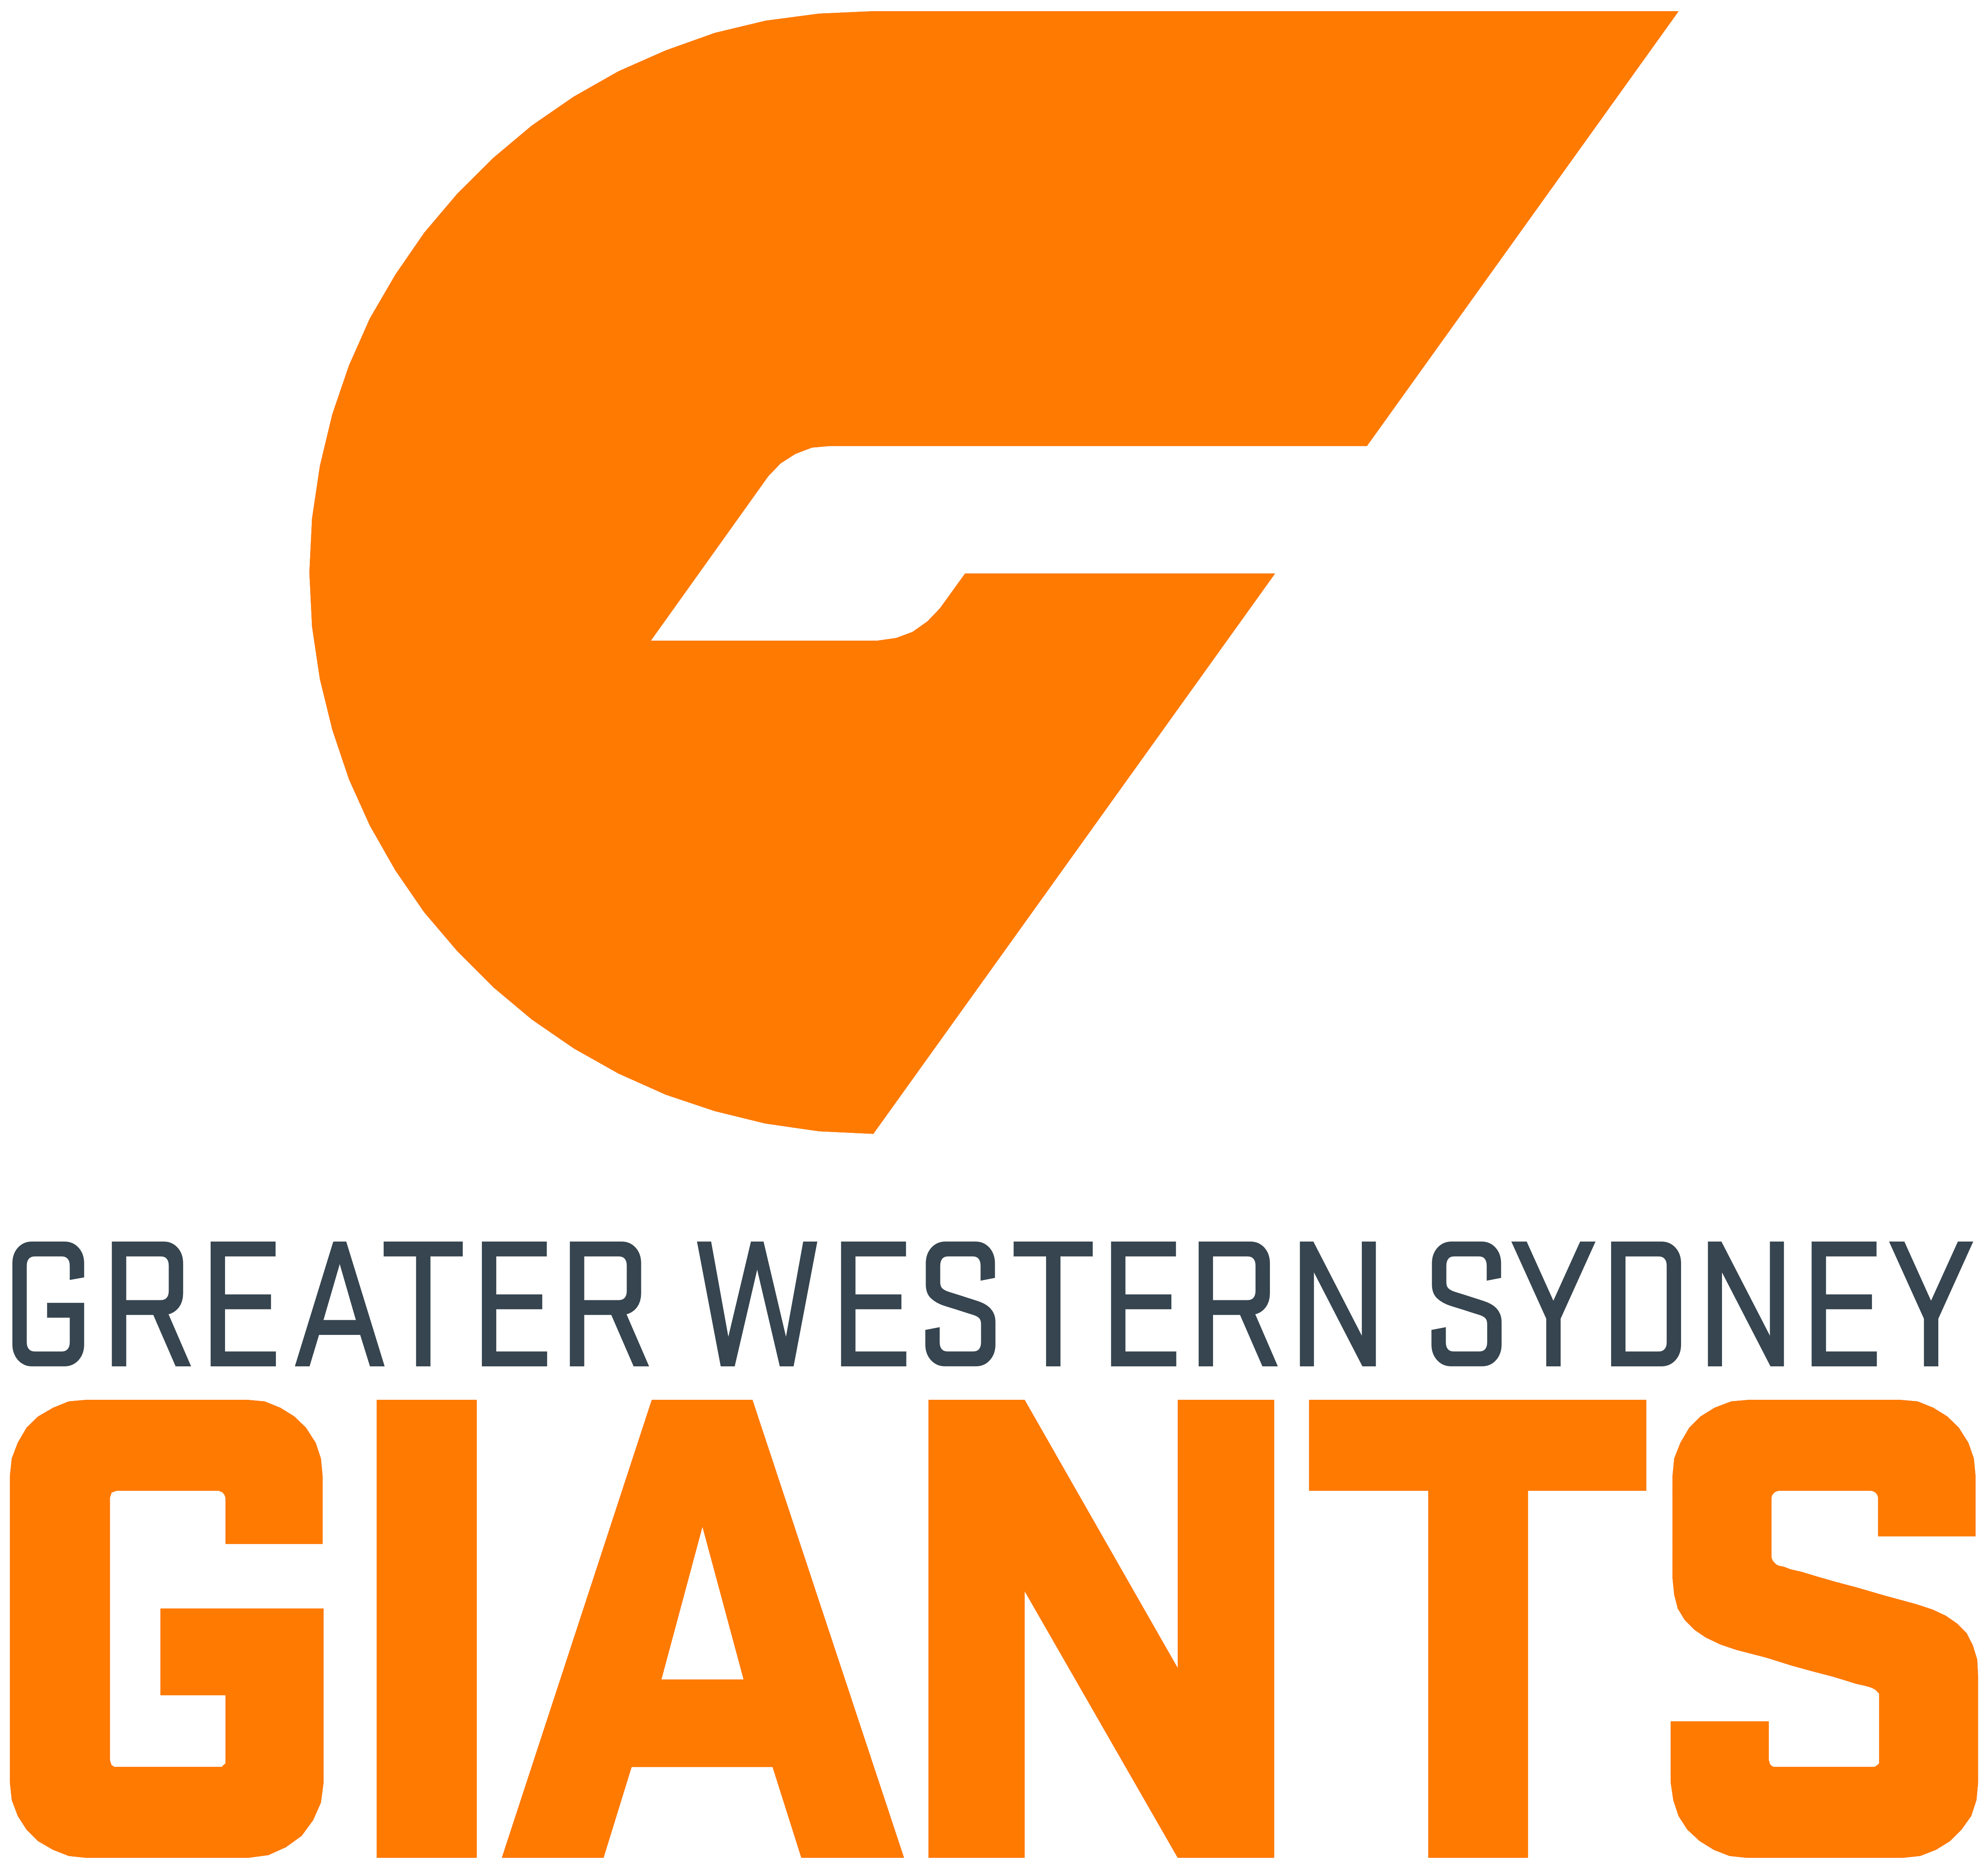 GWS Giants (Greater Western Sydney Giants)